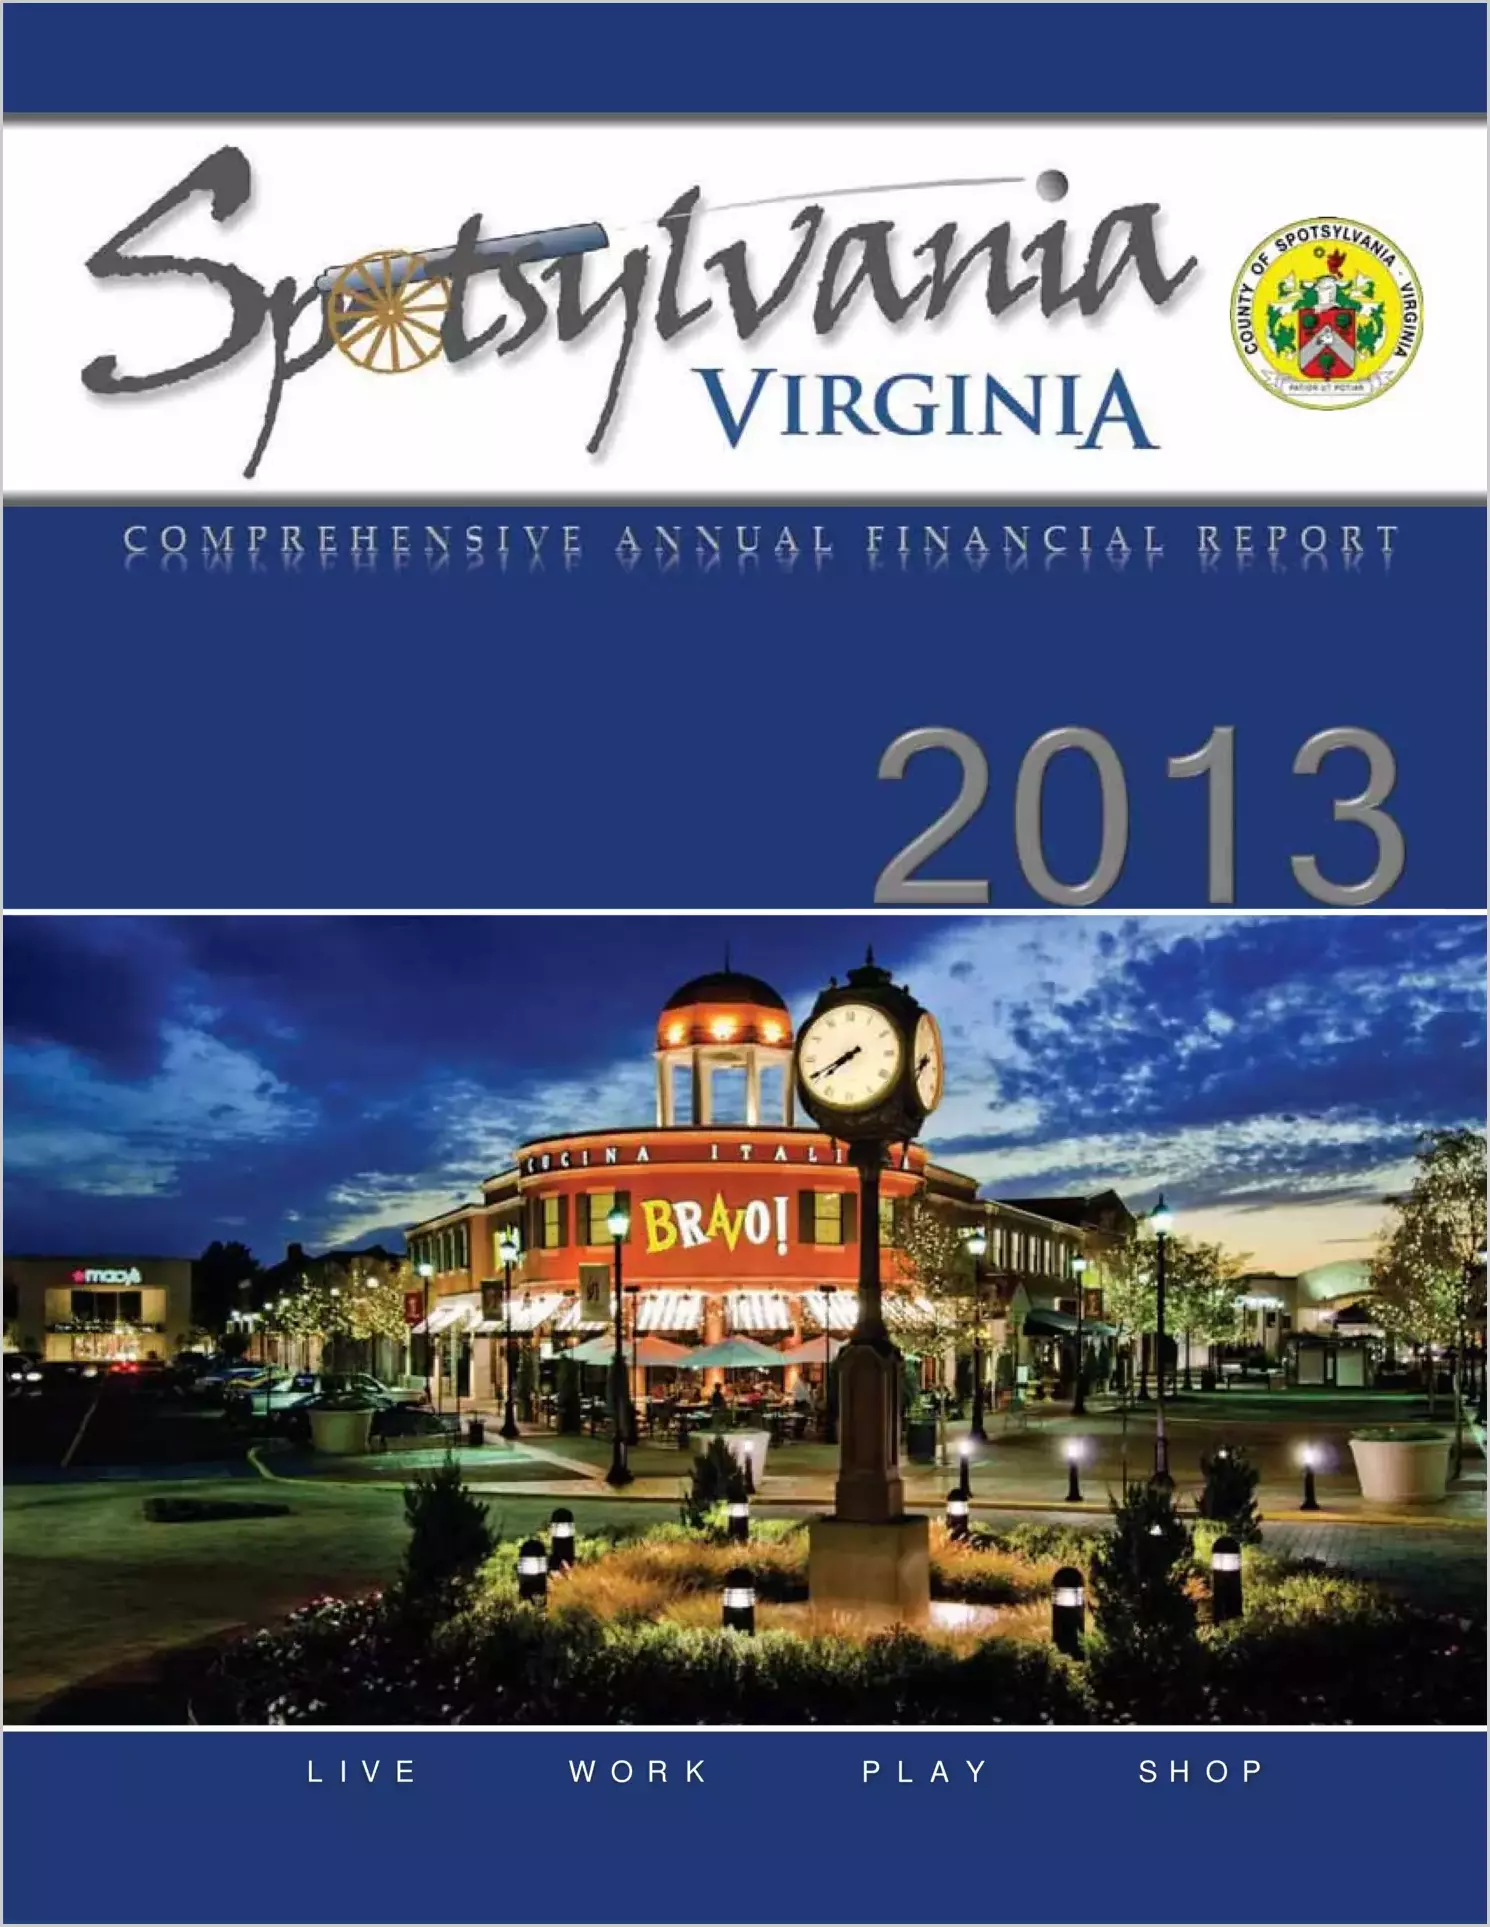 2013 Annual Financial Report for County of Spotsylvania